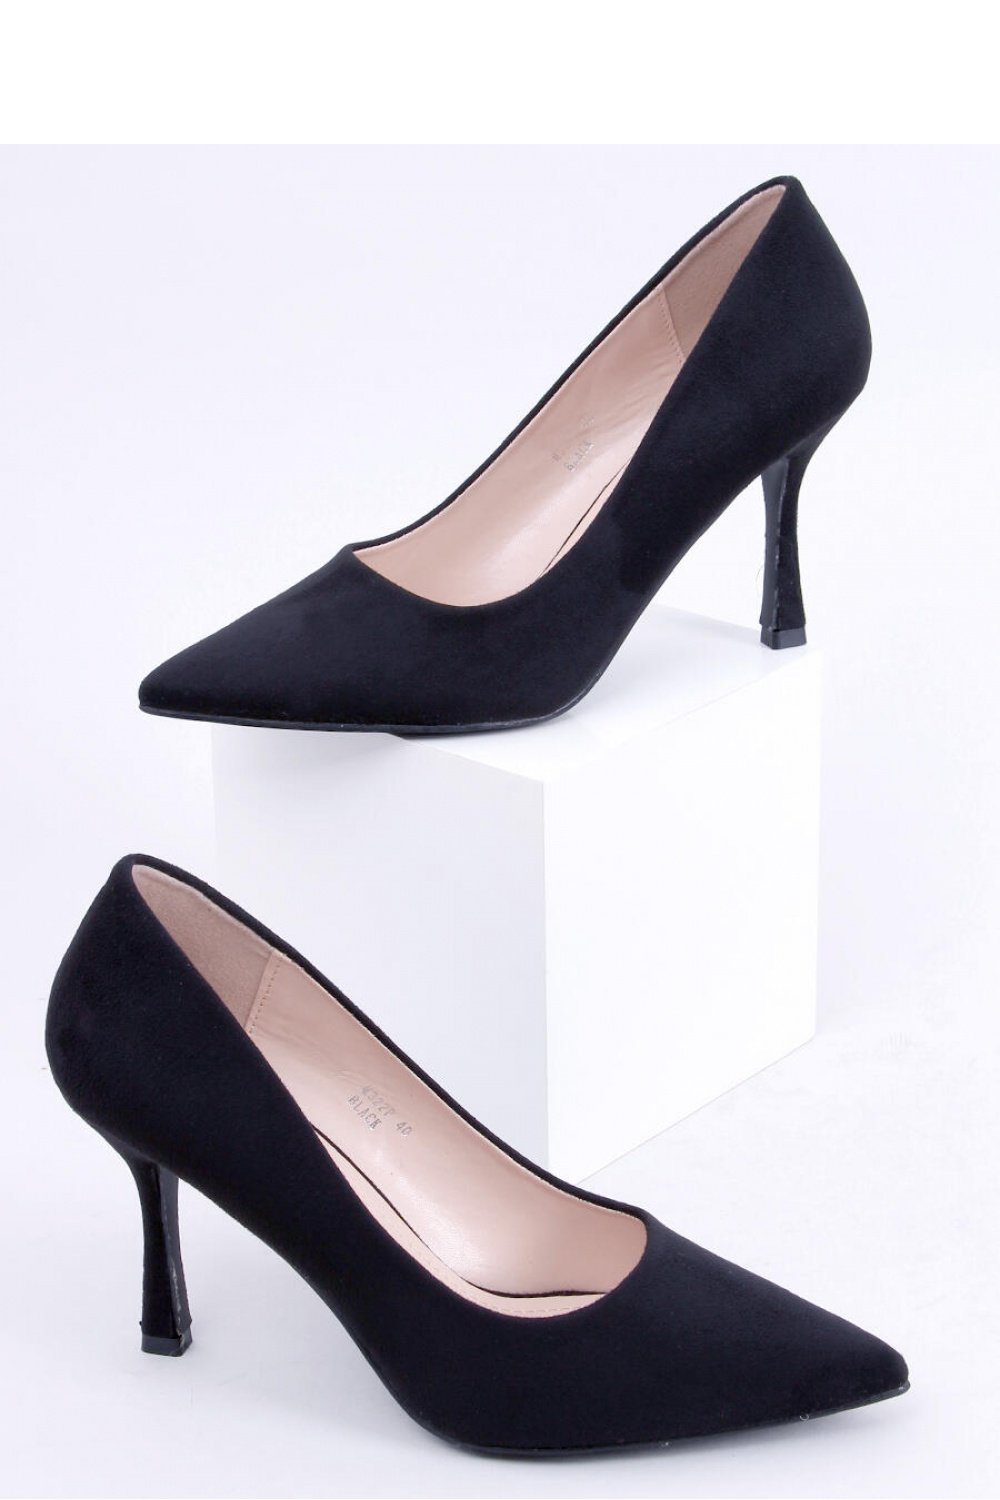 High heels model 171413 Inello Posh Styles Apparel